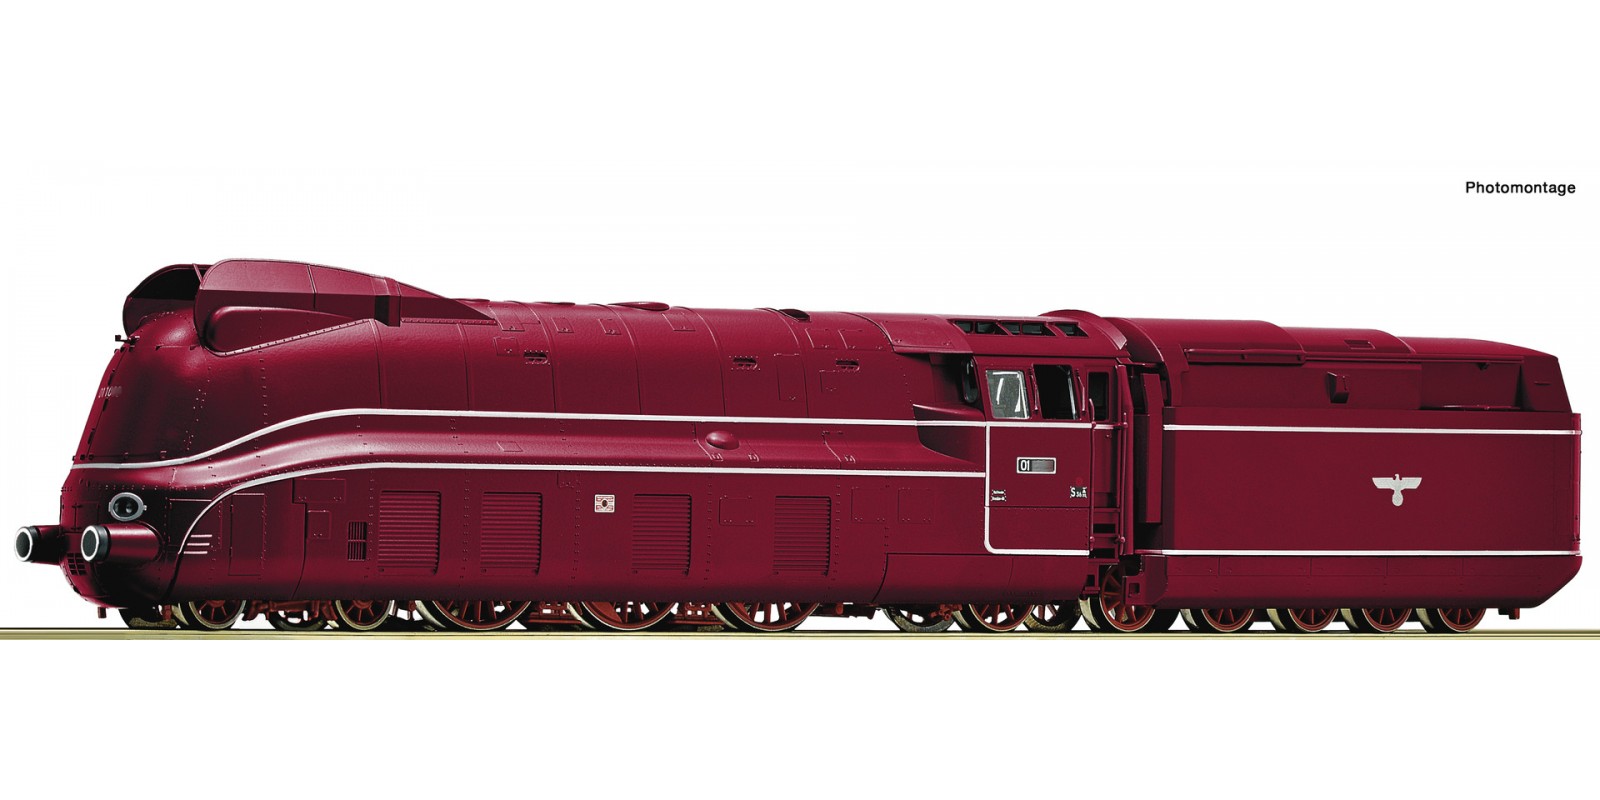 RO79205 Steam locomotive class 01.10